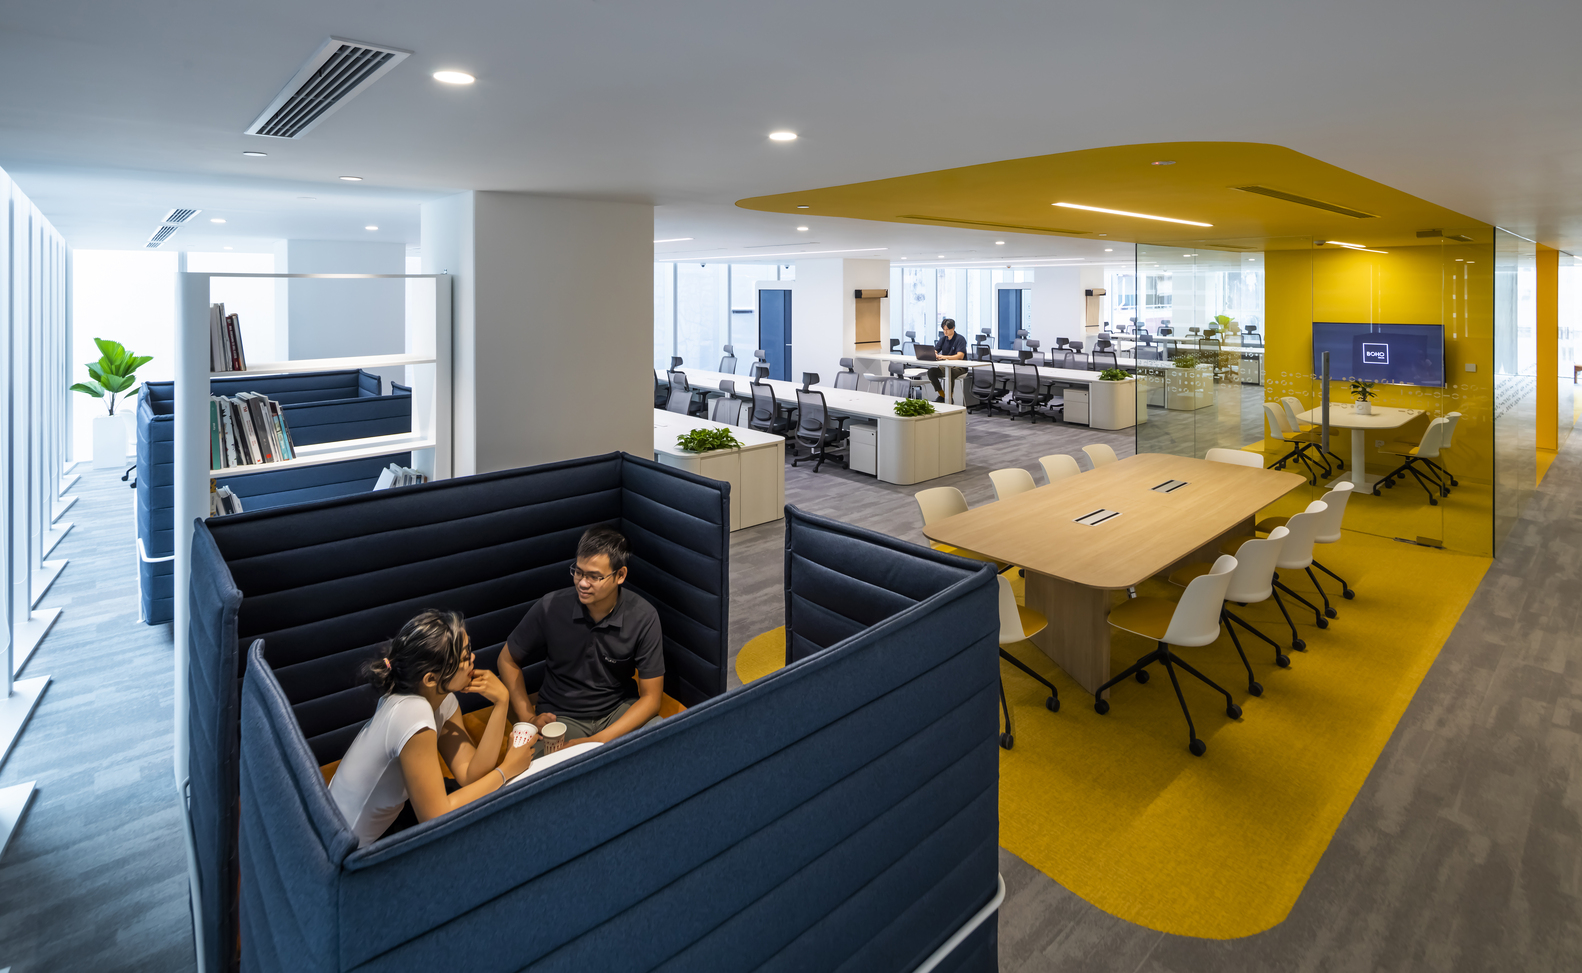 Anti-Boring Minimalist Interior Concept for Office Buildings